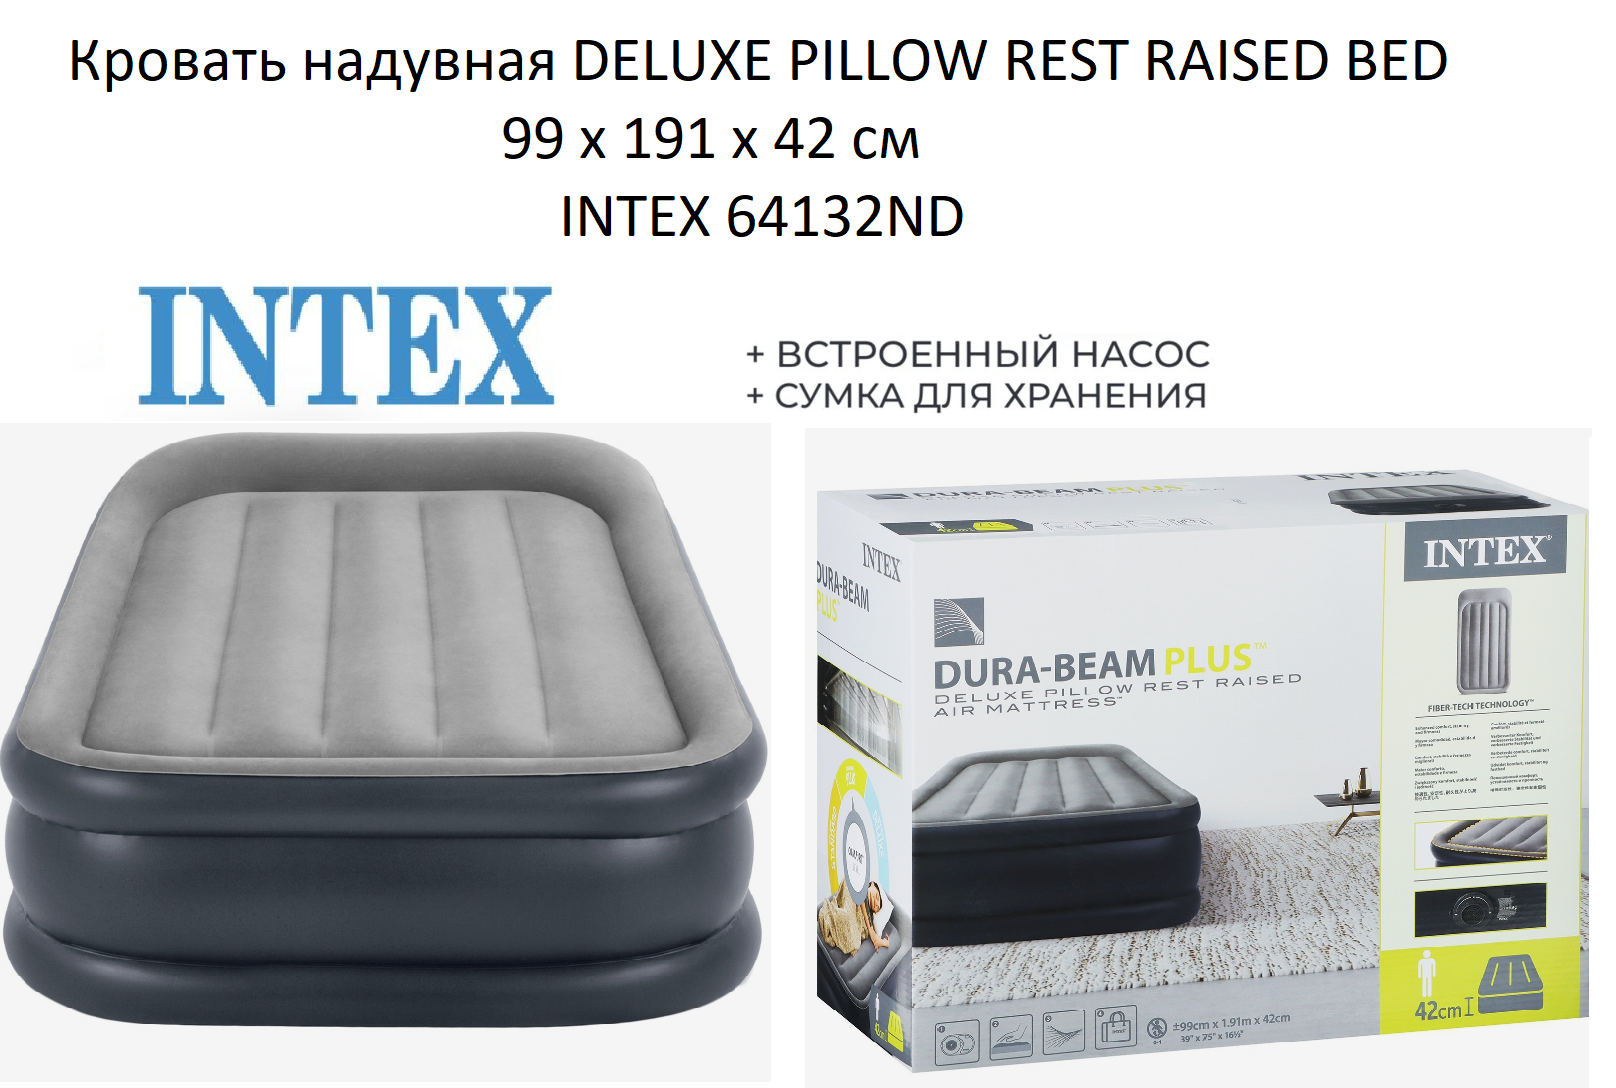 Односпальная надувная кровать с насосом Intex 99 х 191 х 42 см, Deluxe Pillow rest raised bed